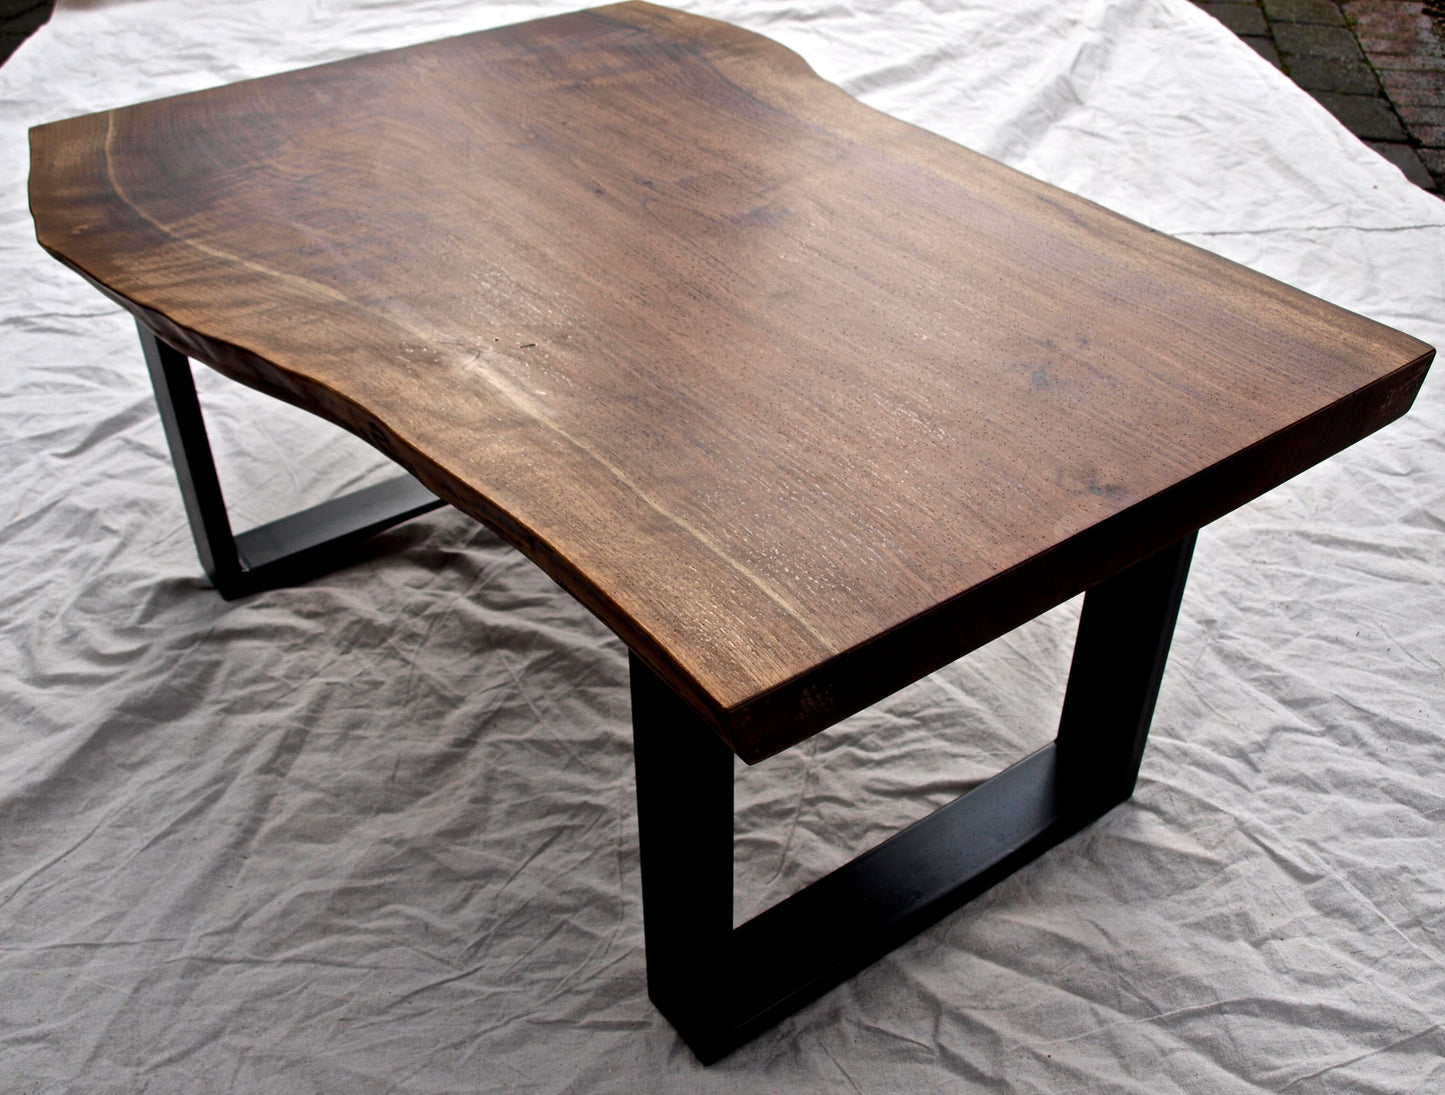 Custom Live Edge Black Walnut Coffee Table.  Build Your Own Coffee Table.  Solid Walnut, Live Edge